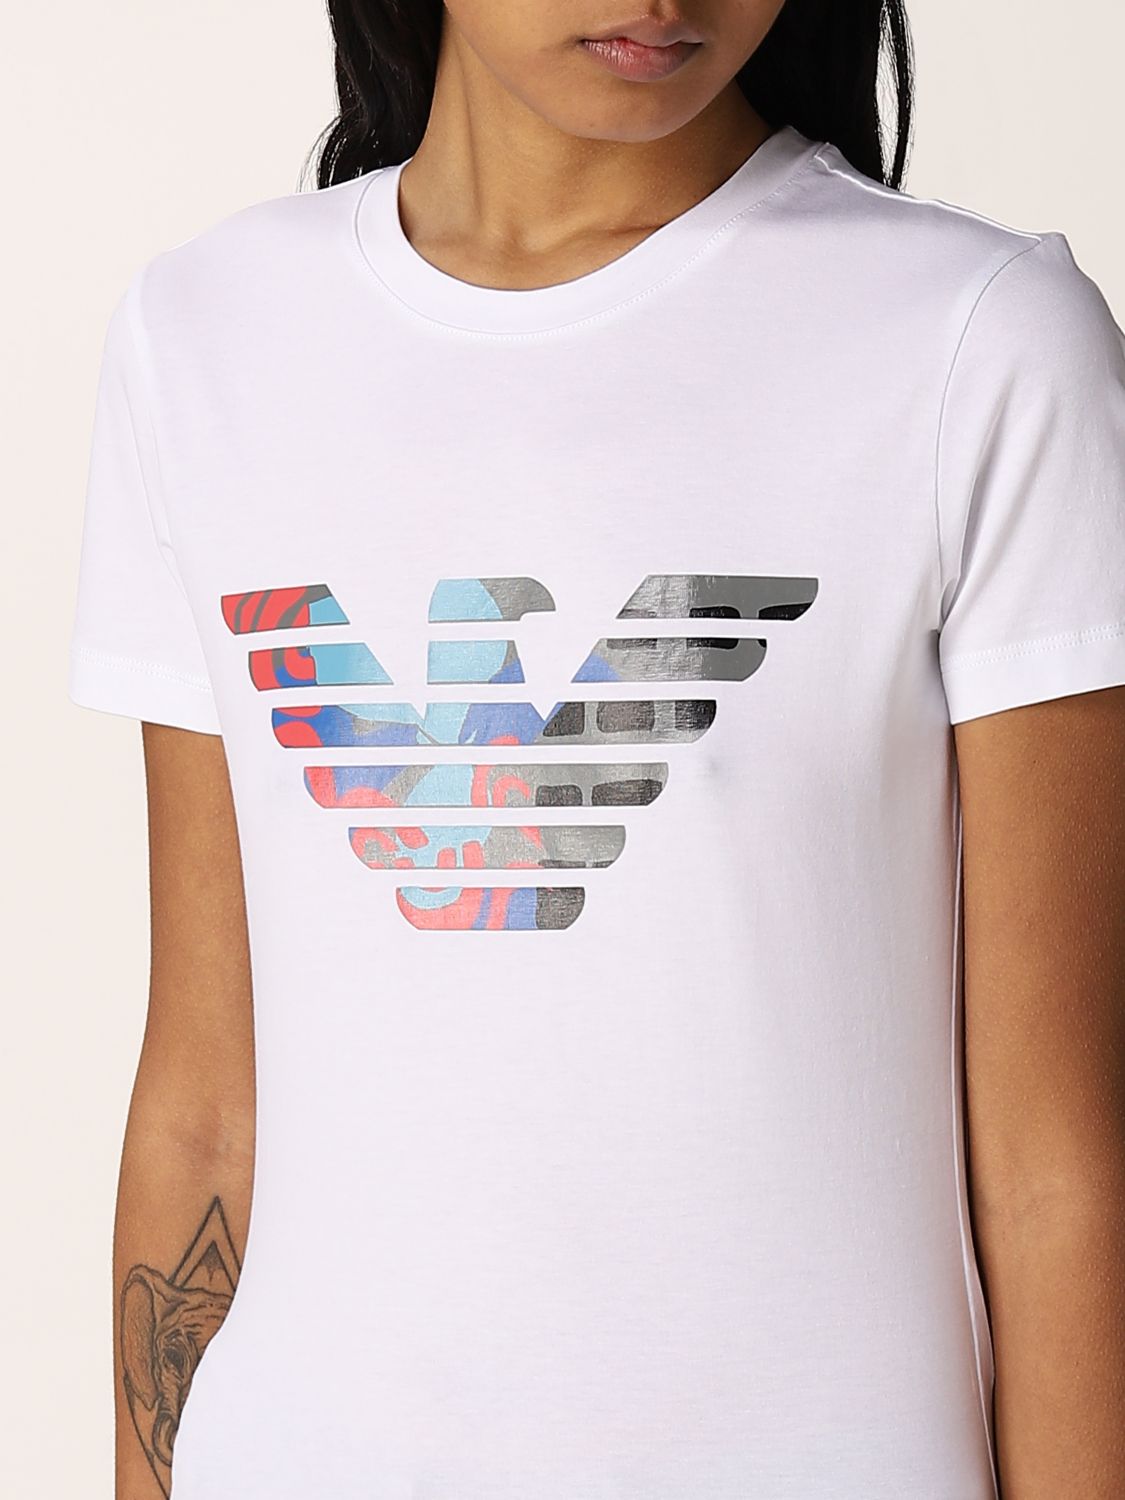 in tegenstelling tot Aanhankelijk Brood Emporio Armani Outlet: T-shirt with eagle logo print - White | Emporio  Armani t-shirt 3L2T7N2J07Z online on GIGLIO.COM